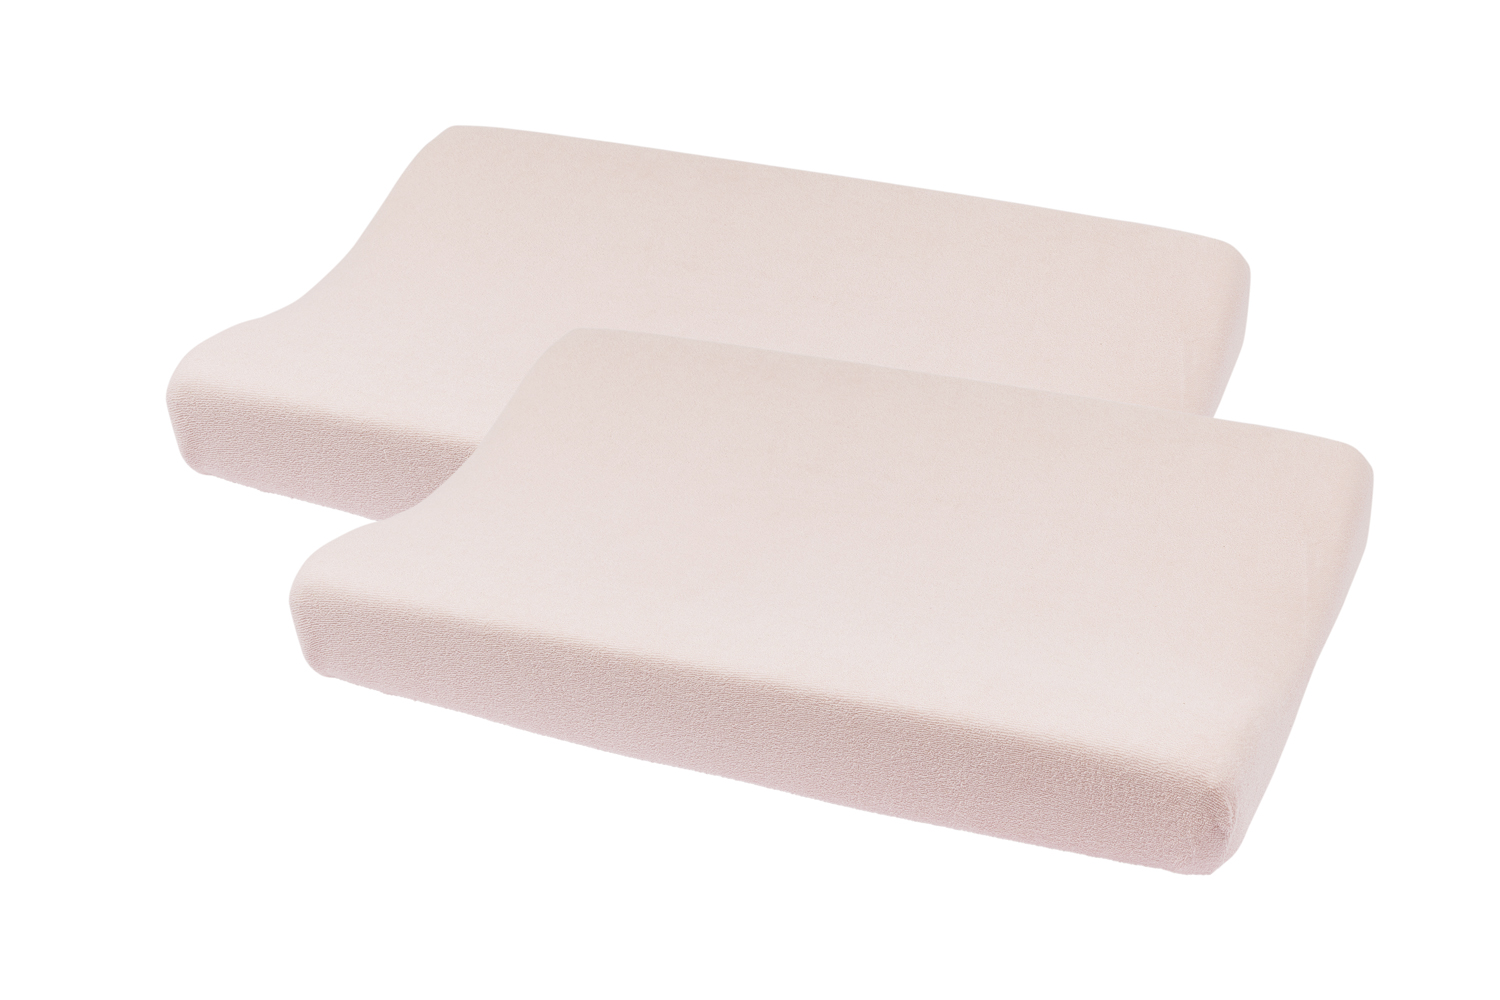 Wickelauflagenbezug 2er pack frottee Uni - soft pink - 50x70cm